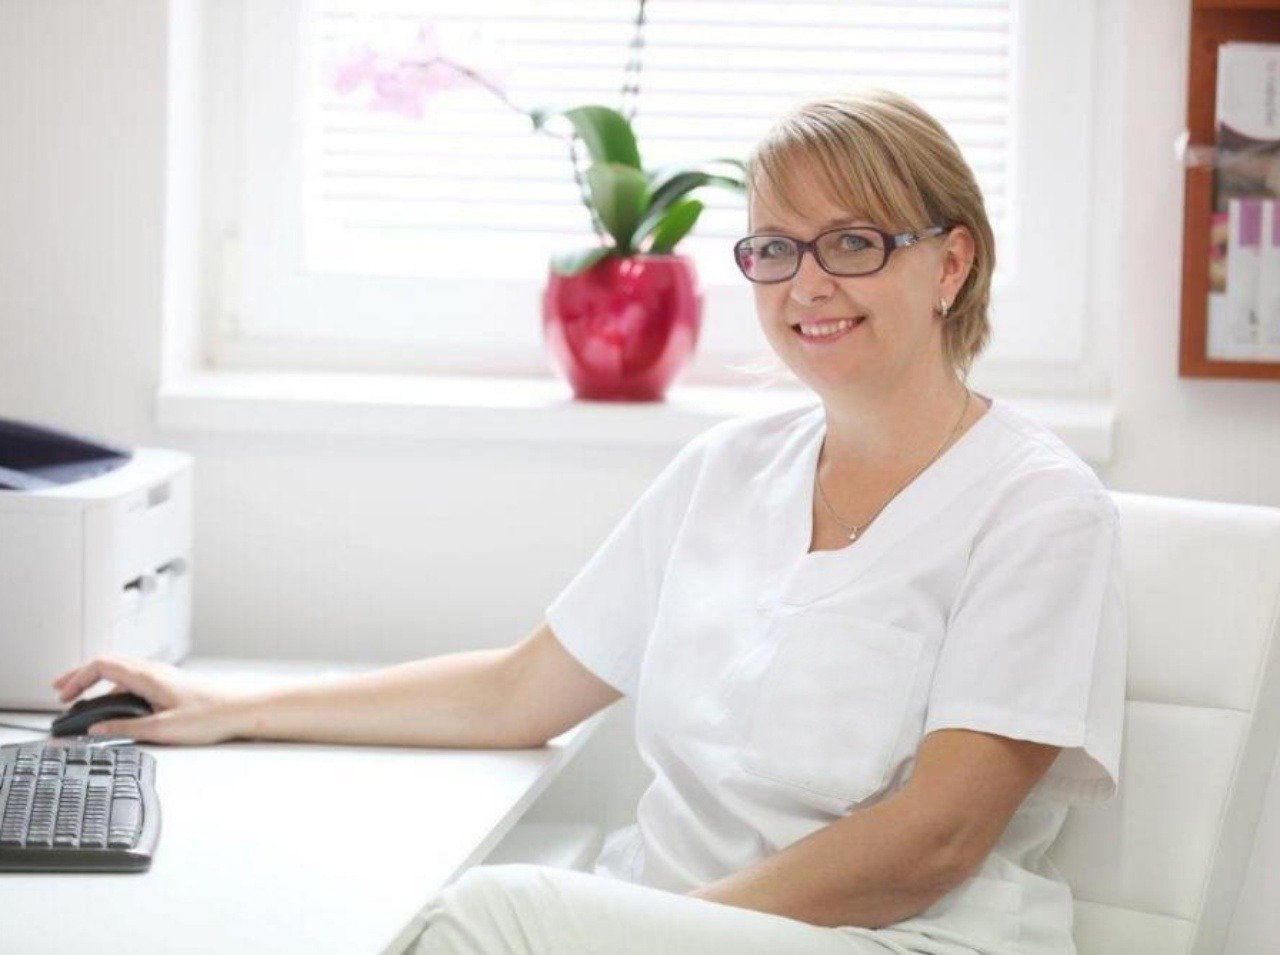 MUDr. Zora Vasiľová pracuje v ambulancii Women´s Health ako gynekologička. 